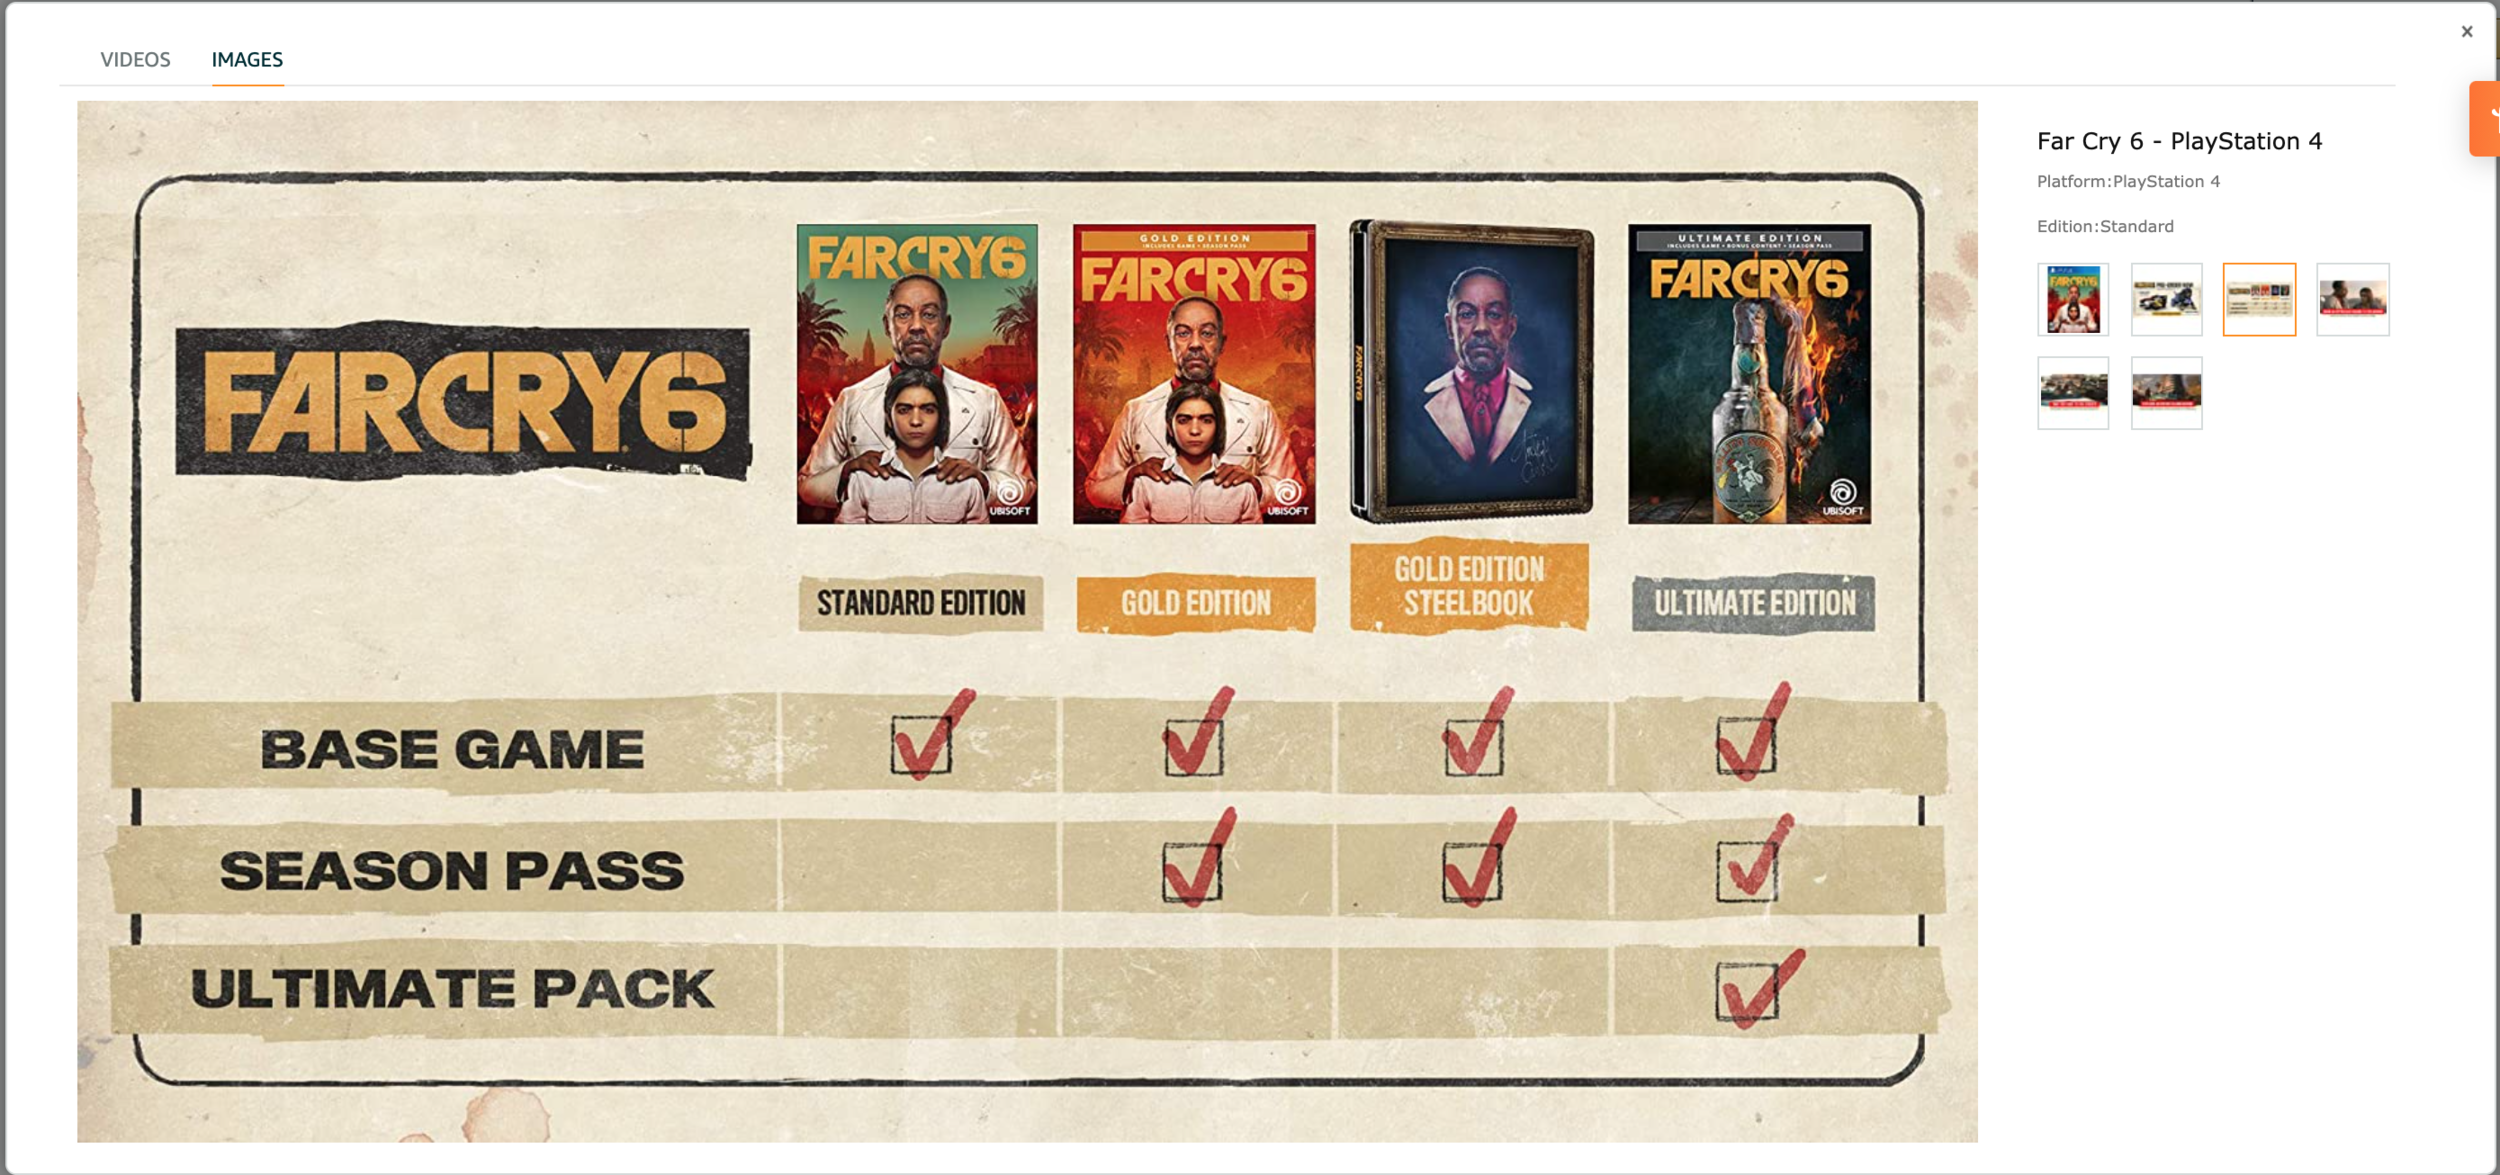 GameStop - Far Cry 6 Assets